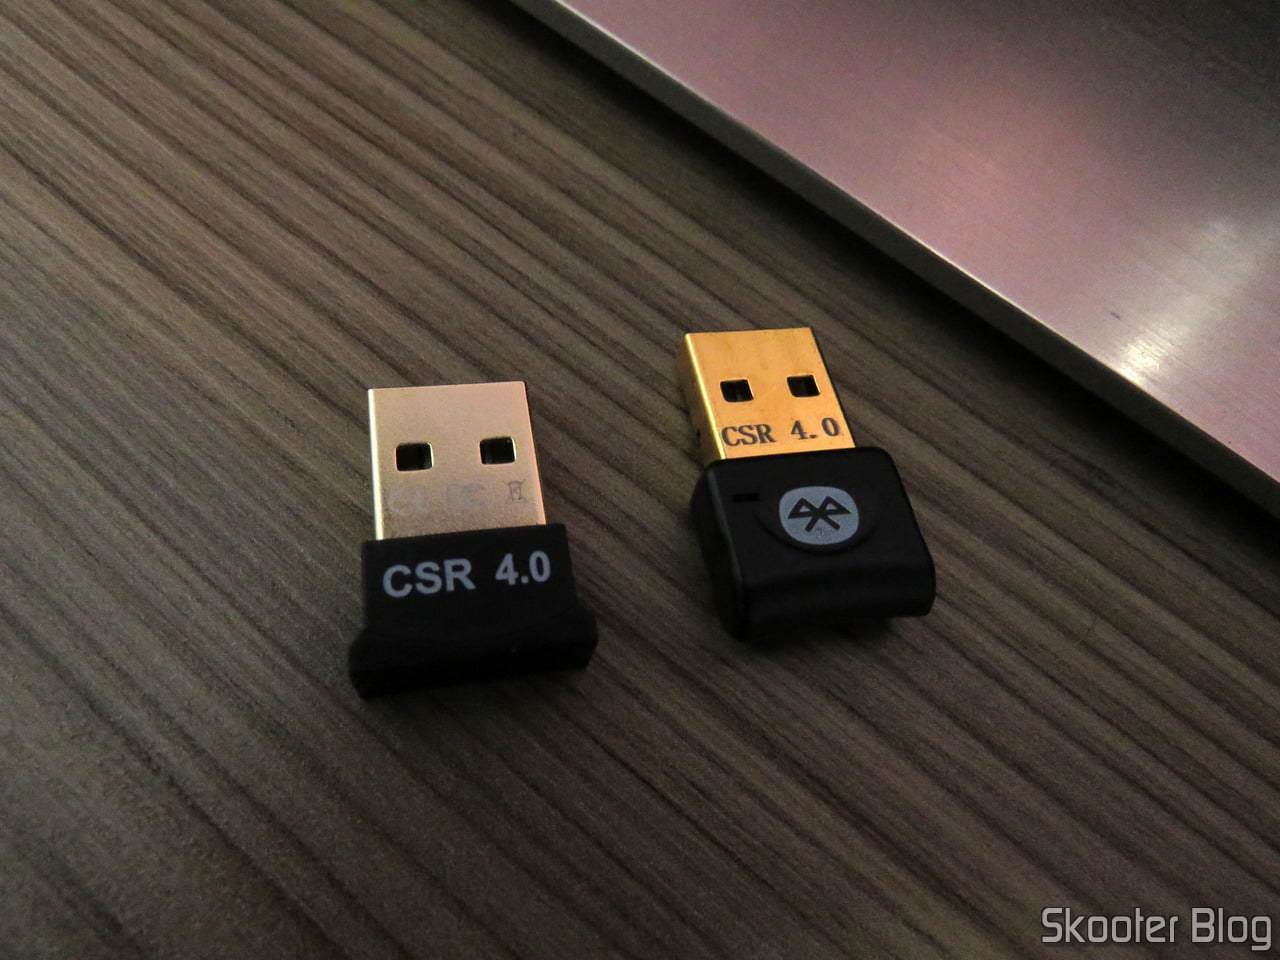 Review] Mini Adaptador USB Bluetooth v4.0 CSR - USBVID_0A12&PID_0001&REV_8891 - para o MiSTer - AliExpress - Skooter Blog